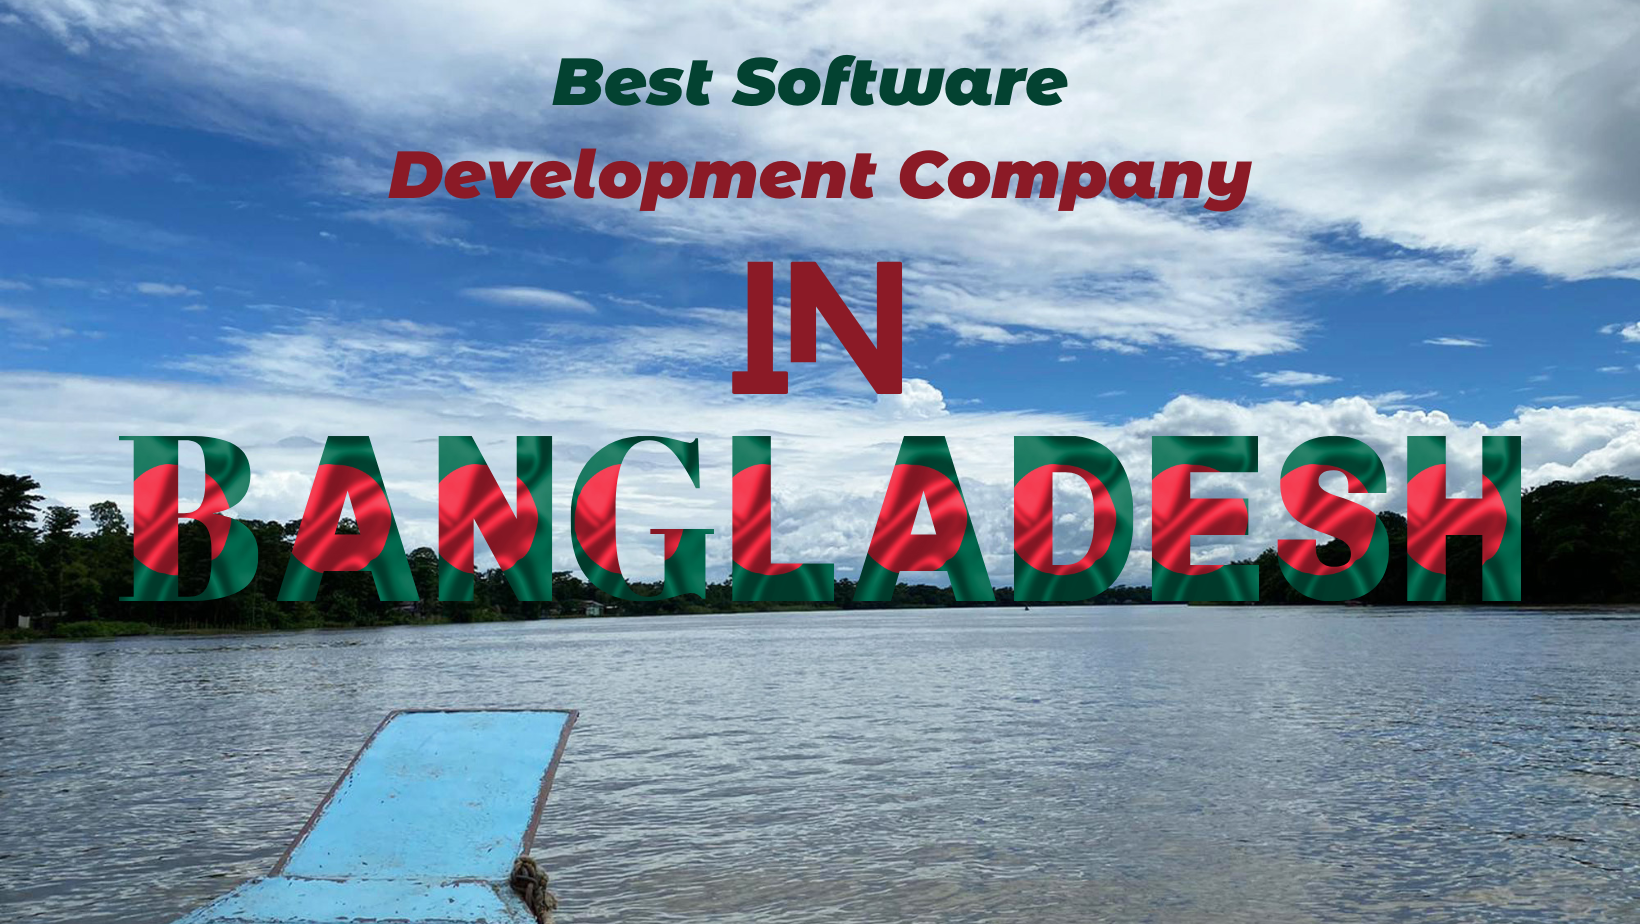 Best Software Development Company in bangladesh